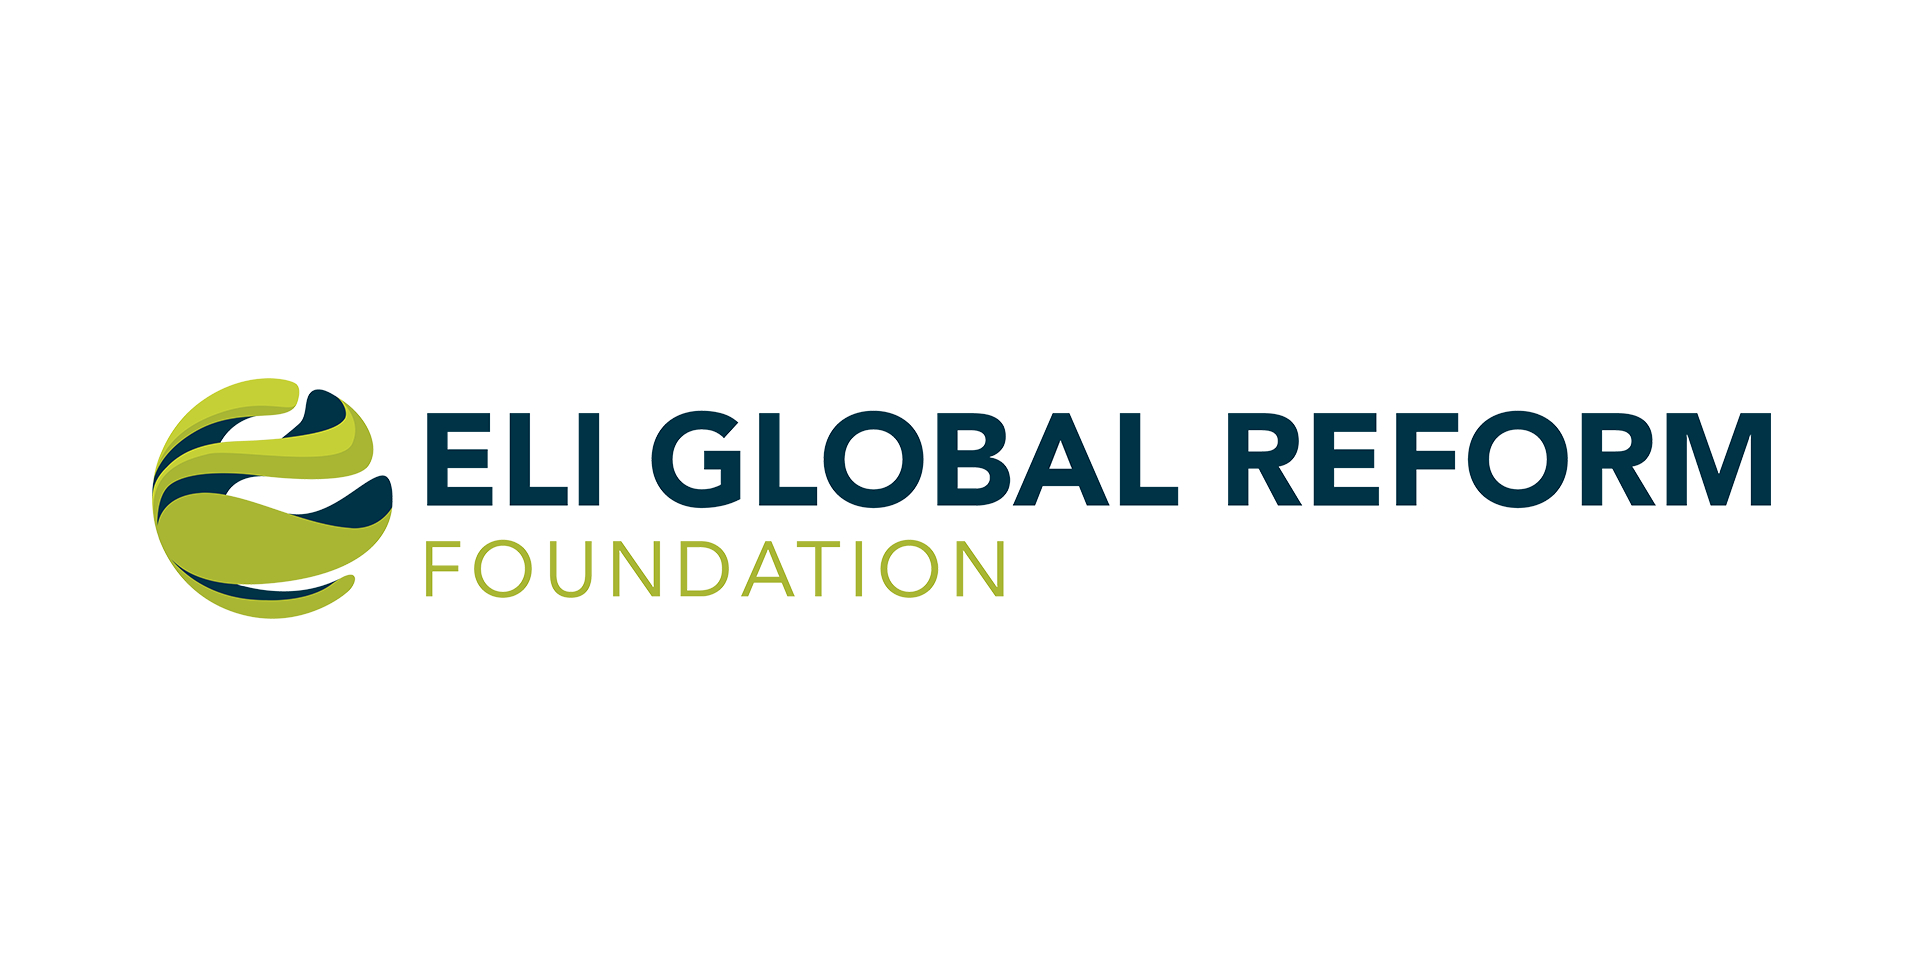 Eli Global Reform Foundation